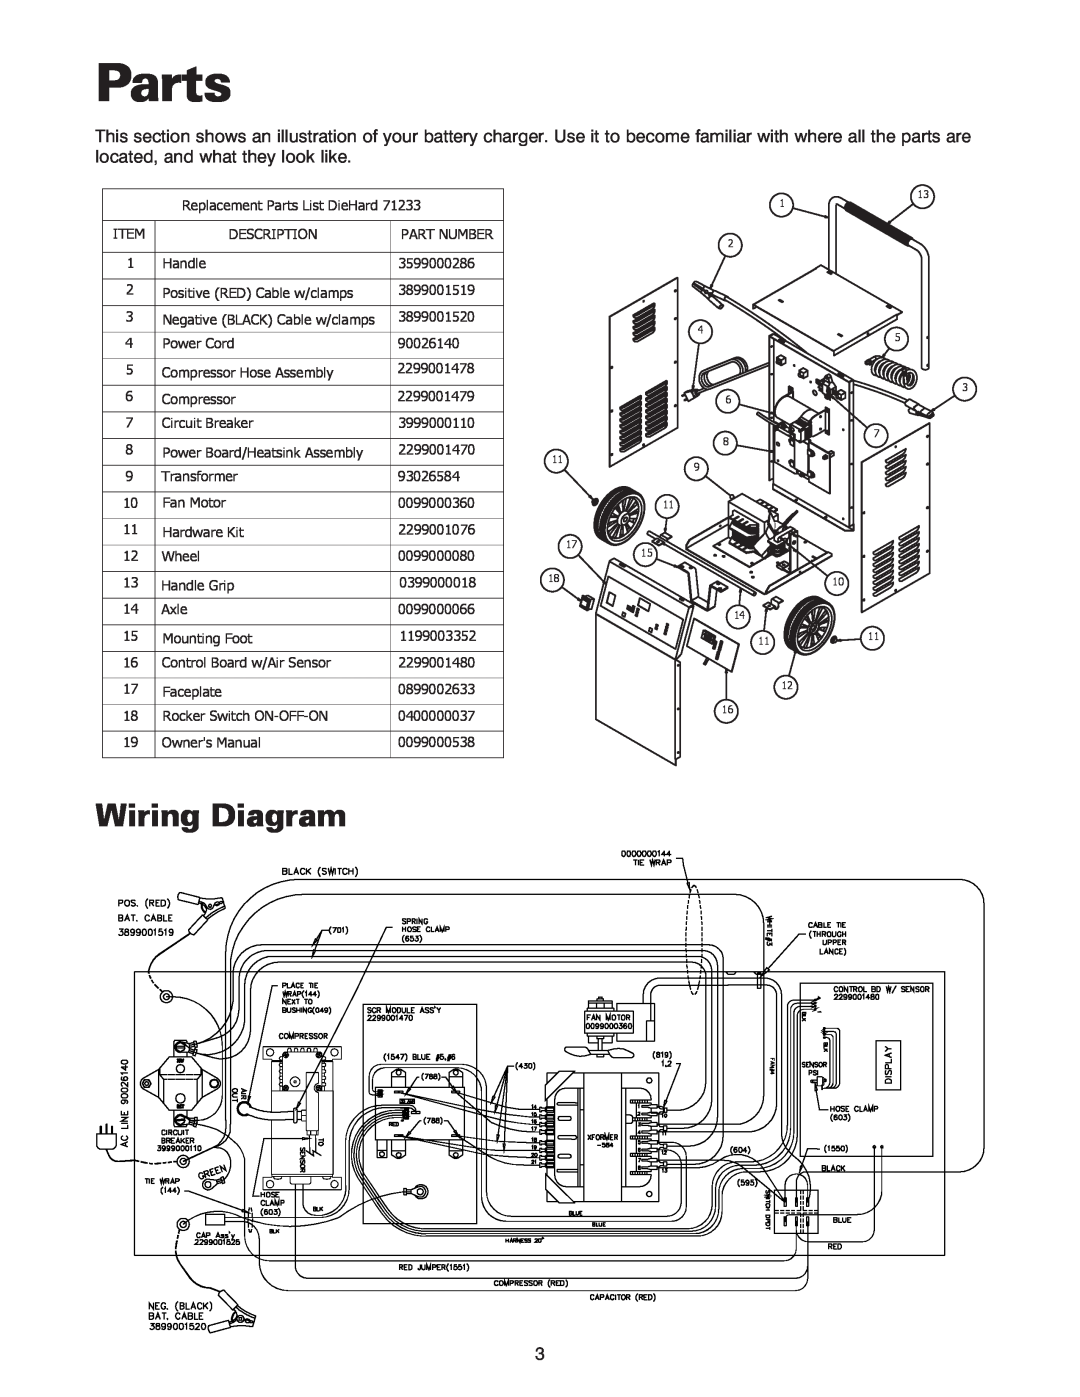 Sears 200.71233 owner manual Parts, Wiring Diagram 